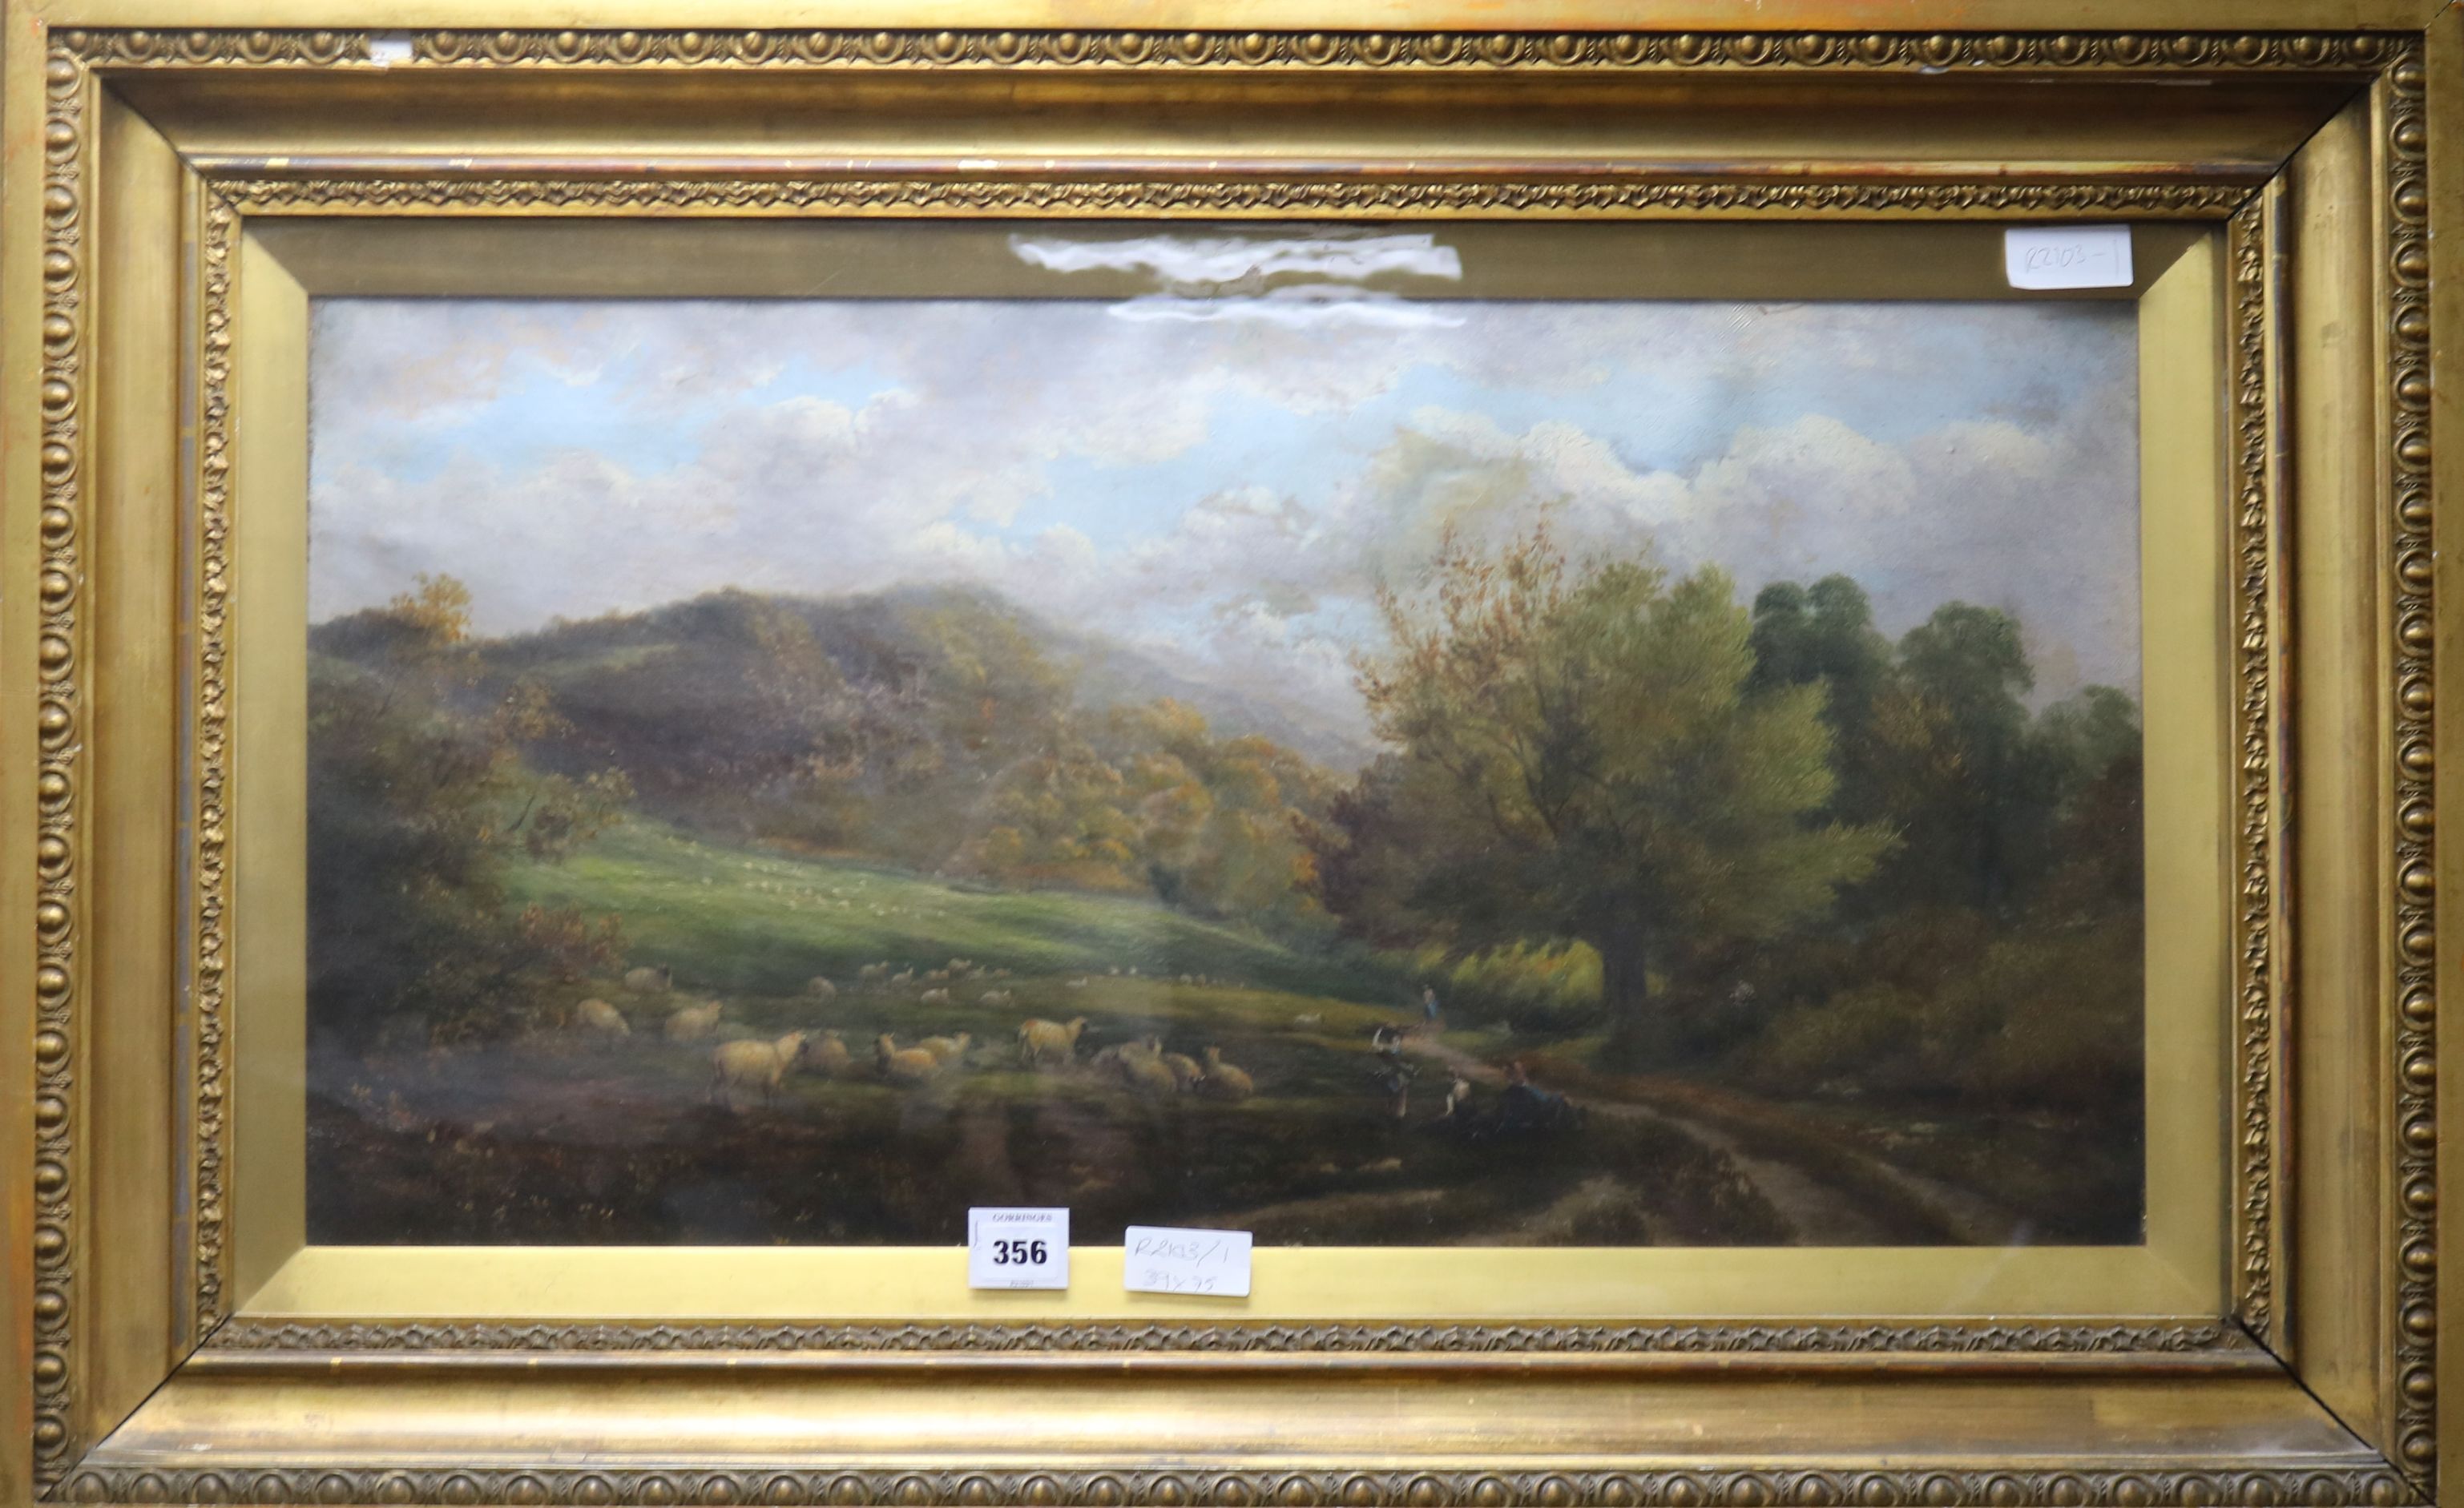 J E Meadows, oil on canvas, sheep in a landscape, 40 x 75cm